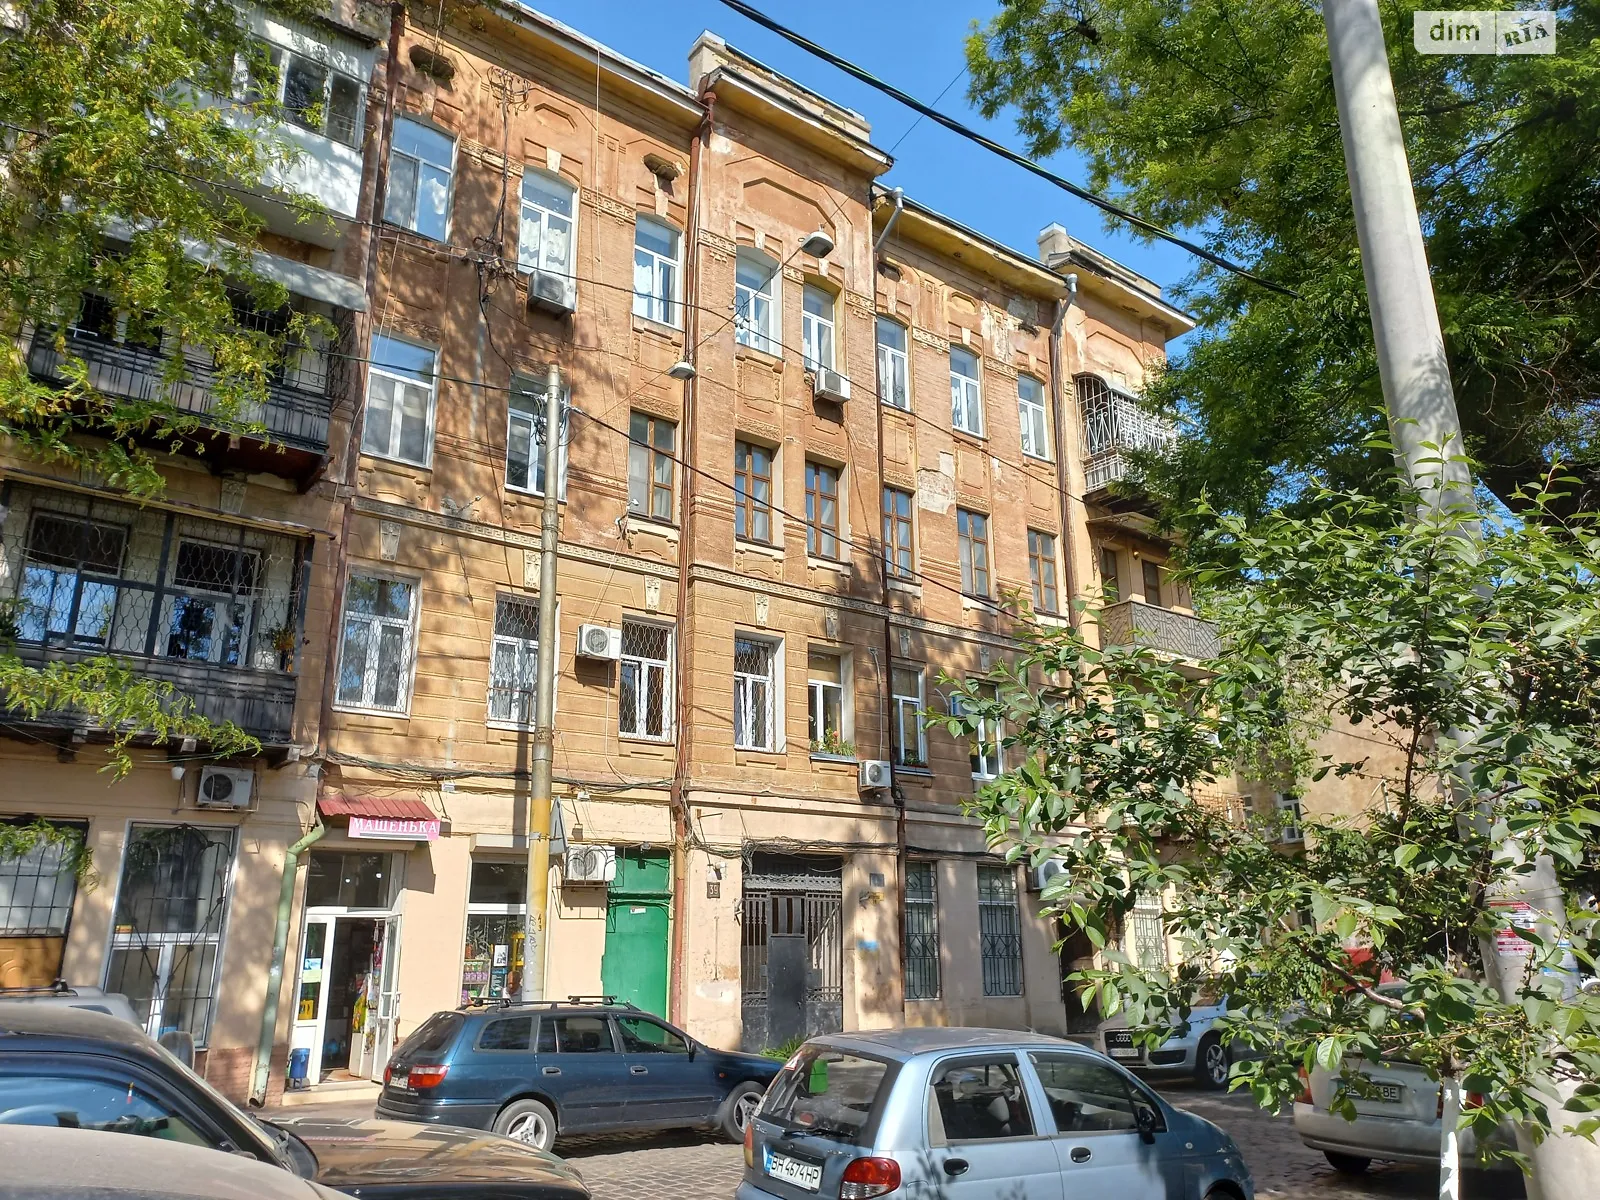 Продается комната 30 кв. м в Одессе, цена: 25000 $ - фото 1